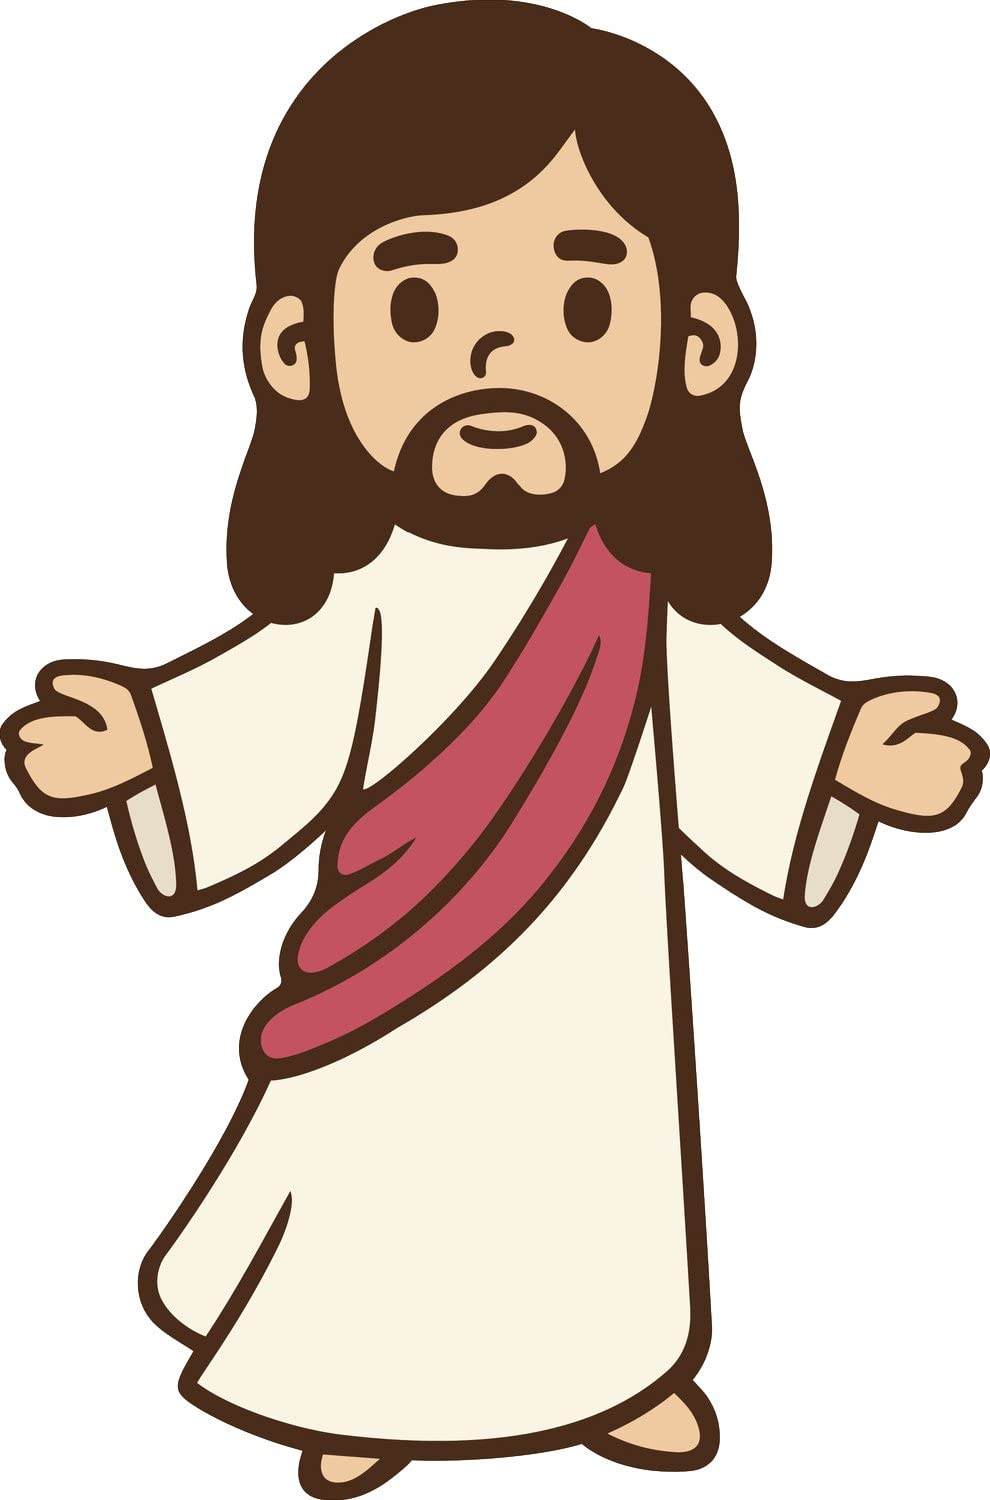 Jesus Cartoon Images With Quotes Jesus Looking Up Png Bodemawasuma